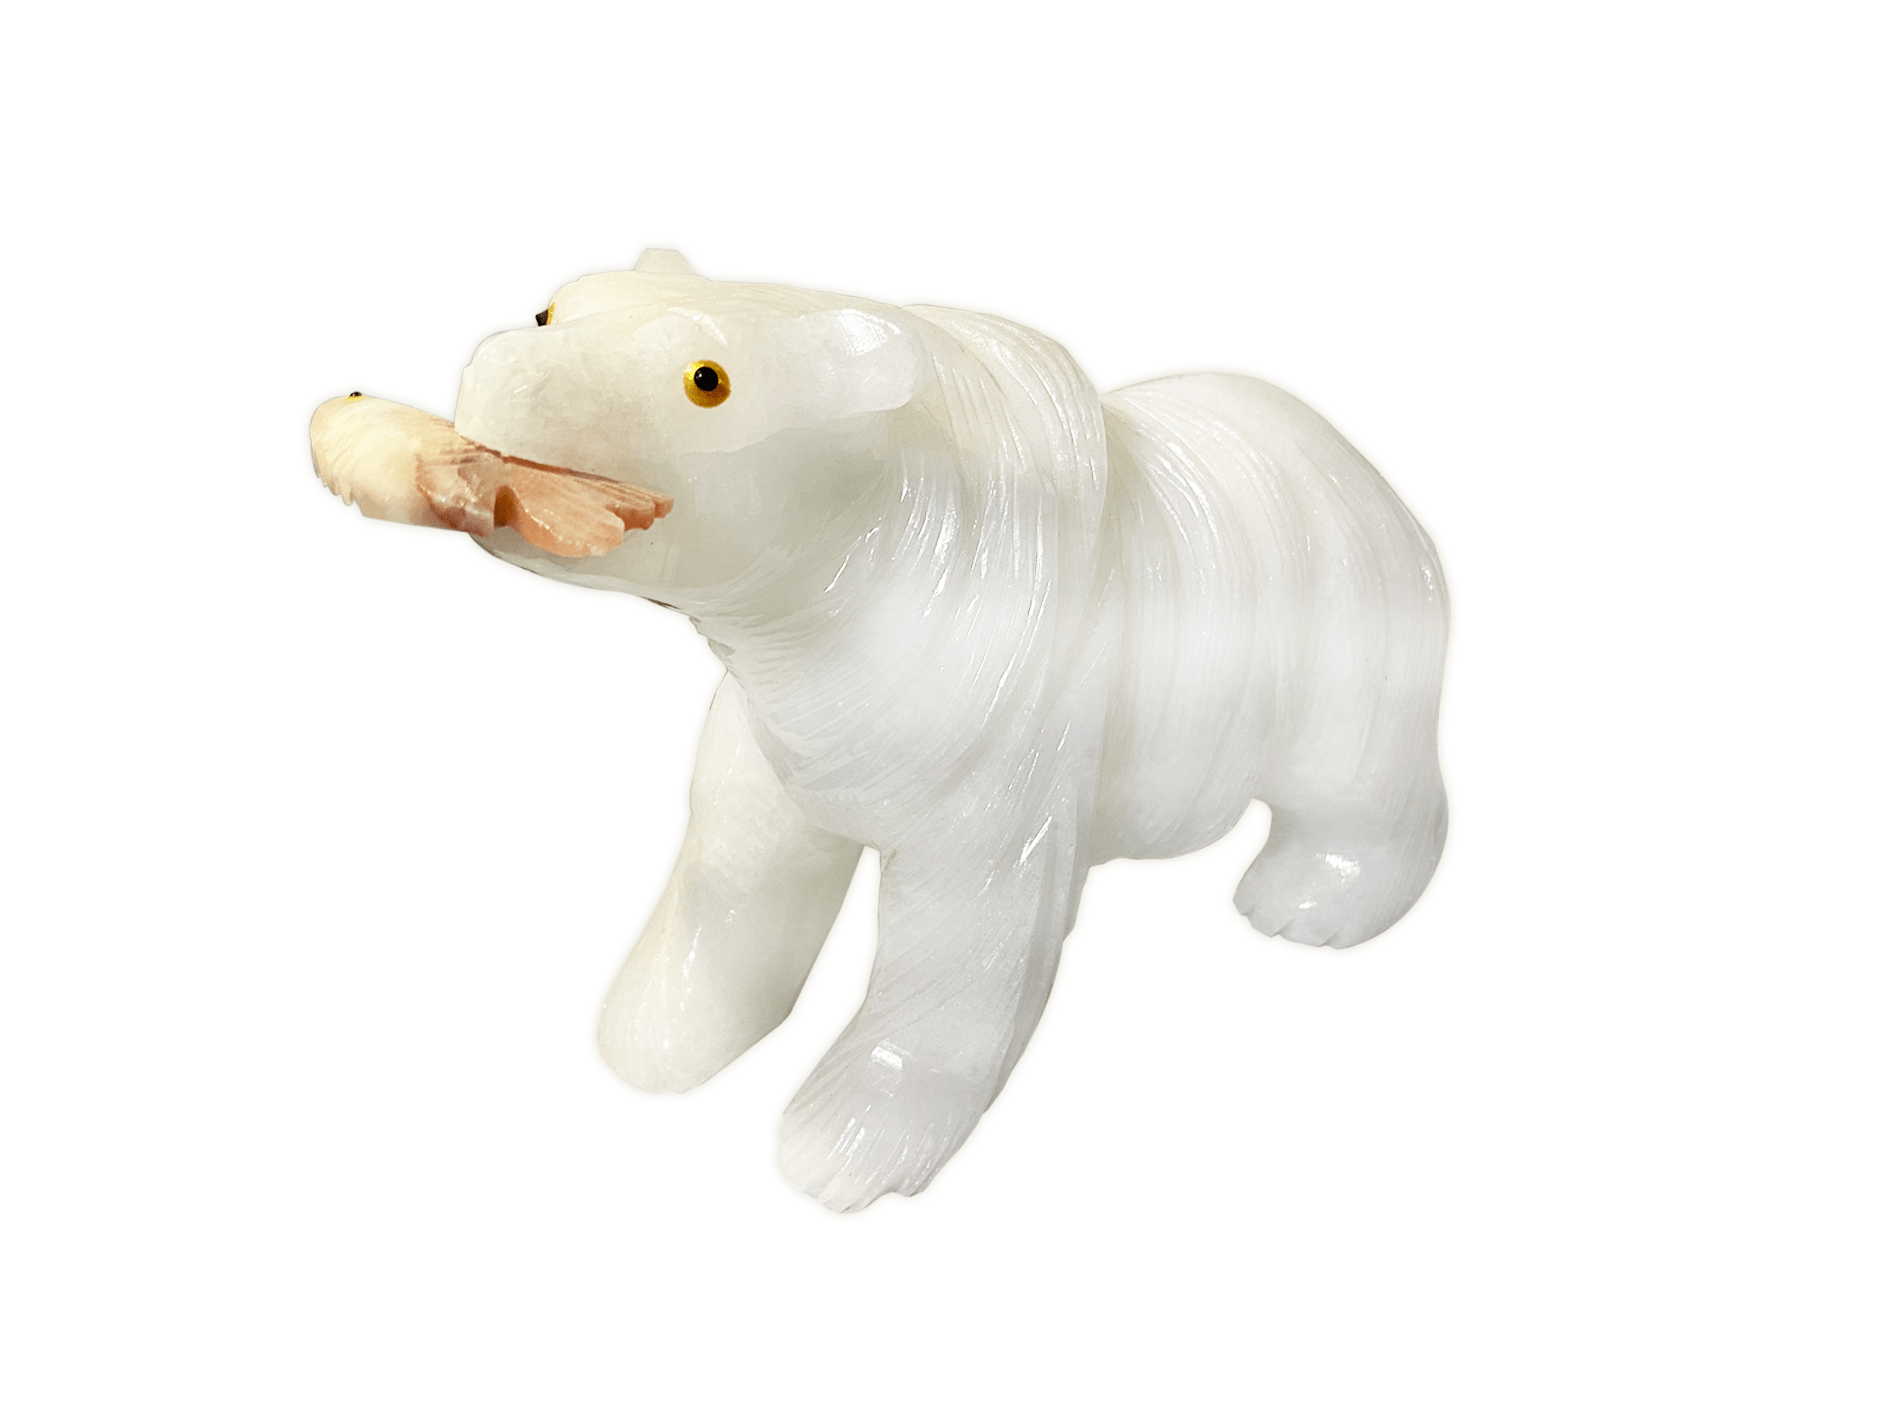  Urso de cristal branco fino acabamento